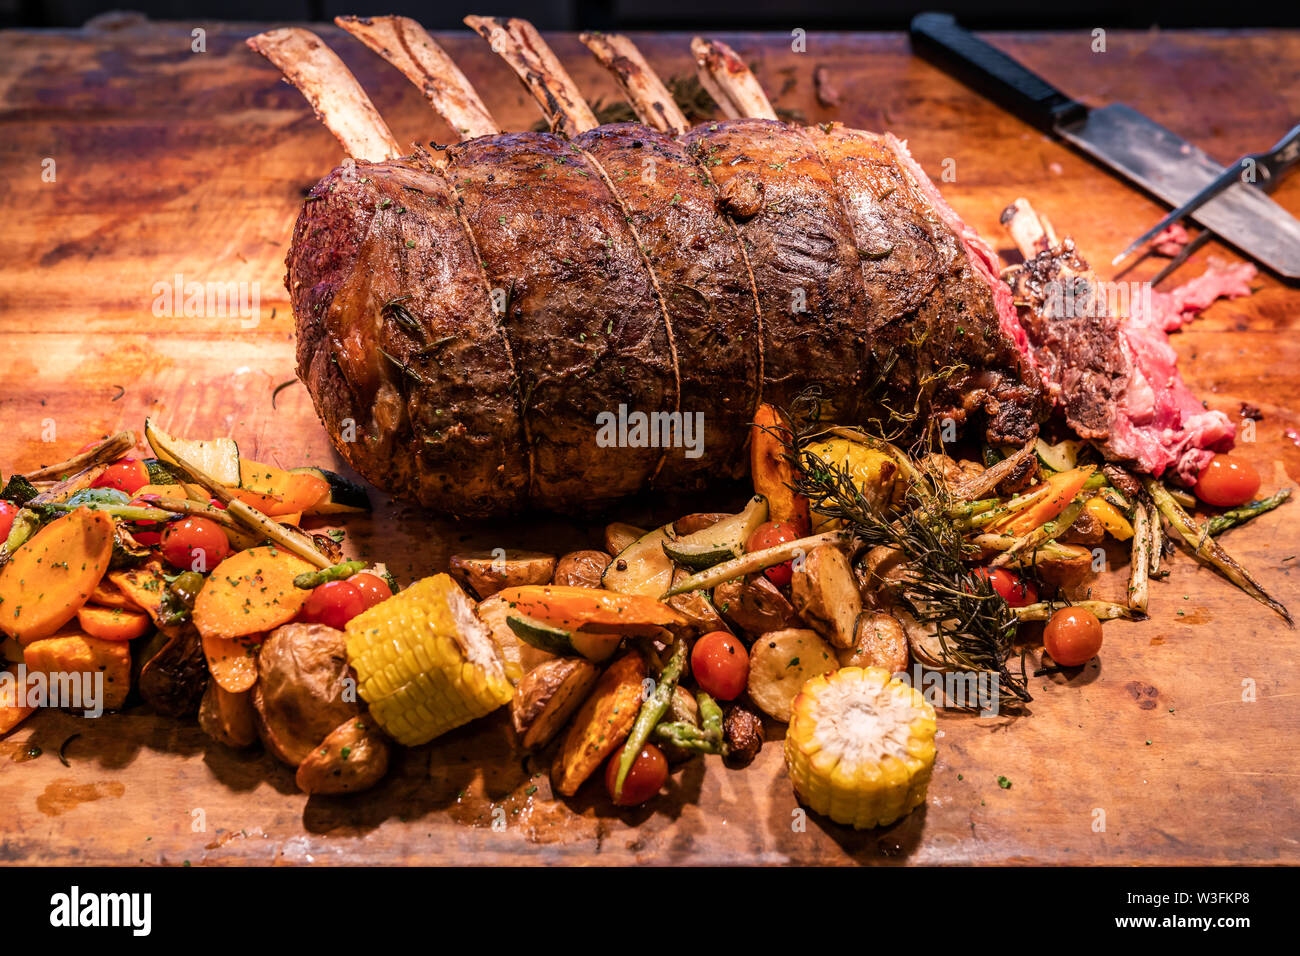 https://c8.alamy.com/comp/W3FKP8/wagyu-beef-roast-prime-rib-carving-food-W3FKP8.jpg